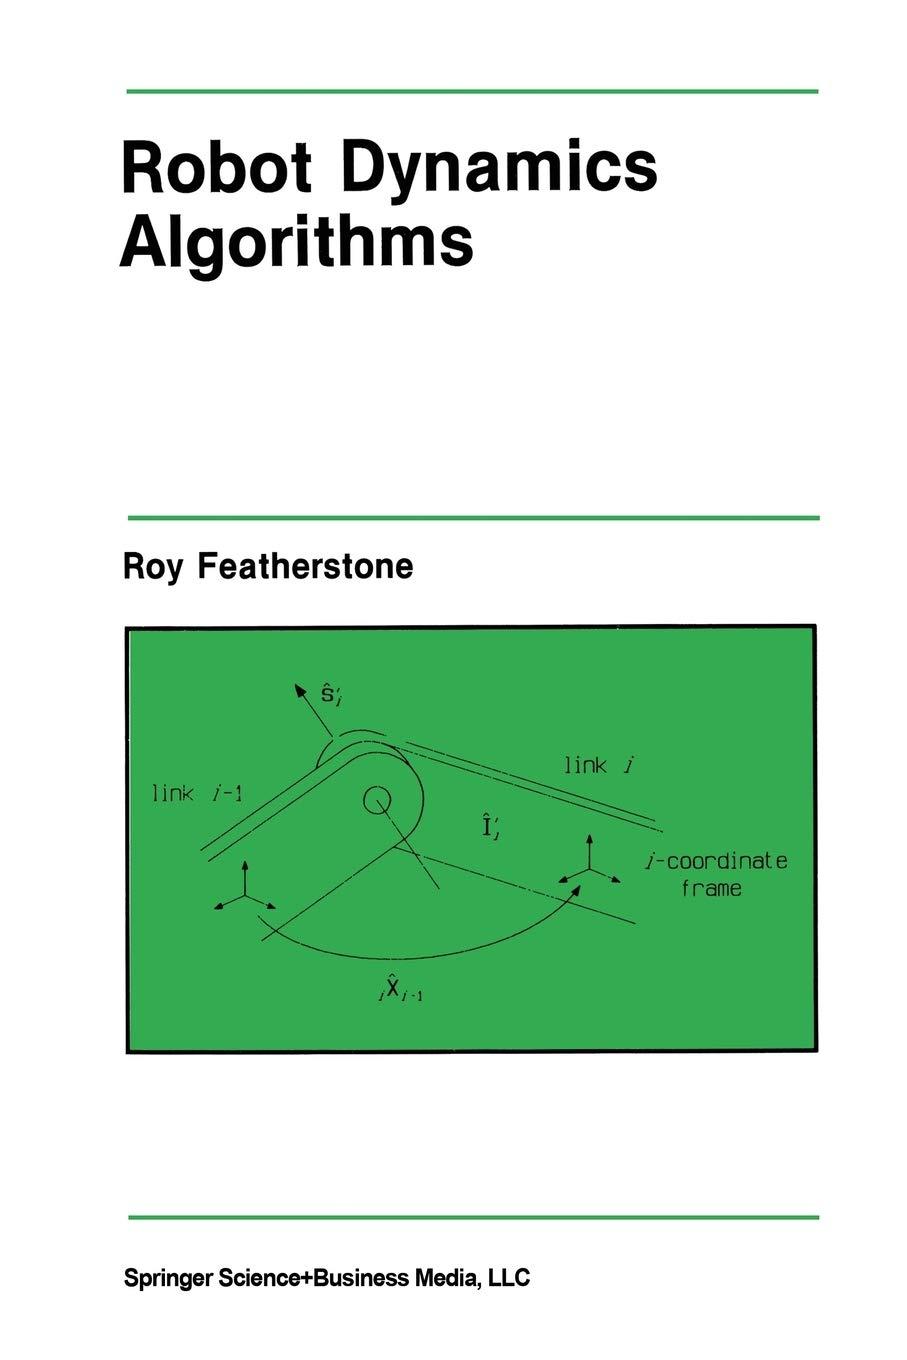 robot dynamics algorithms 1984 edition roy featherstone 9781475764376, 978-1475764376